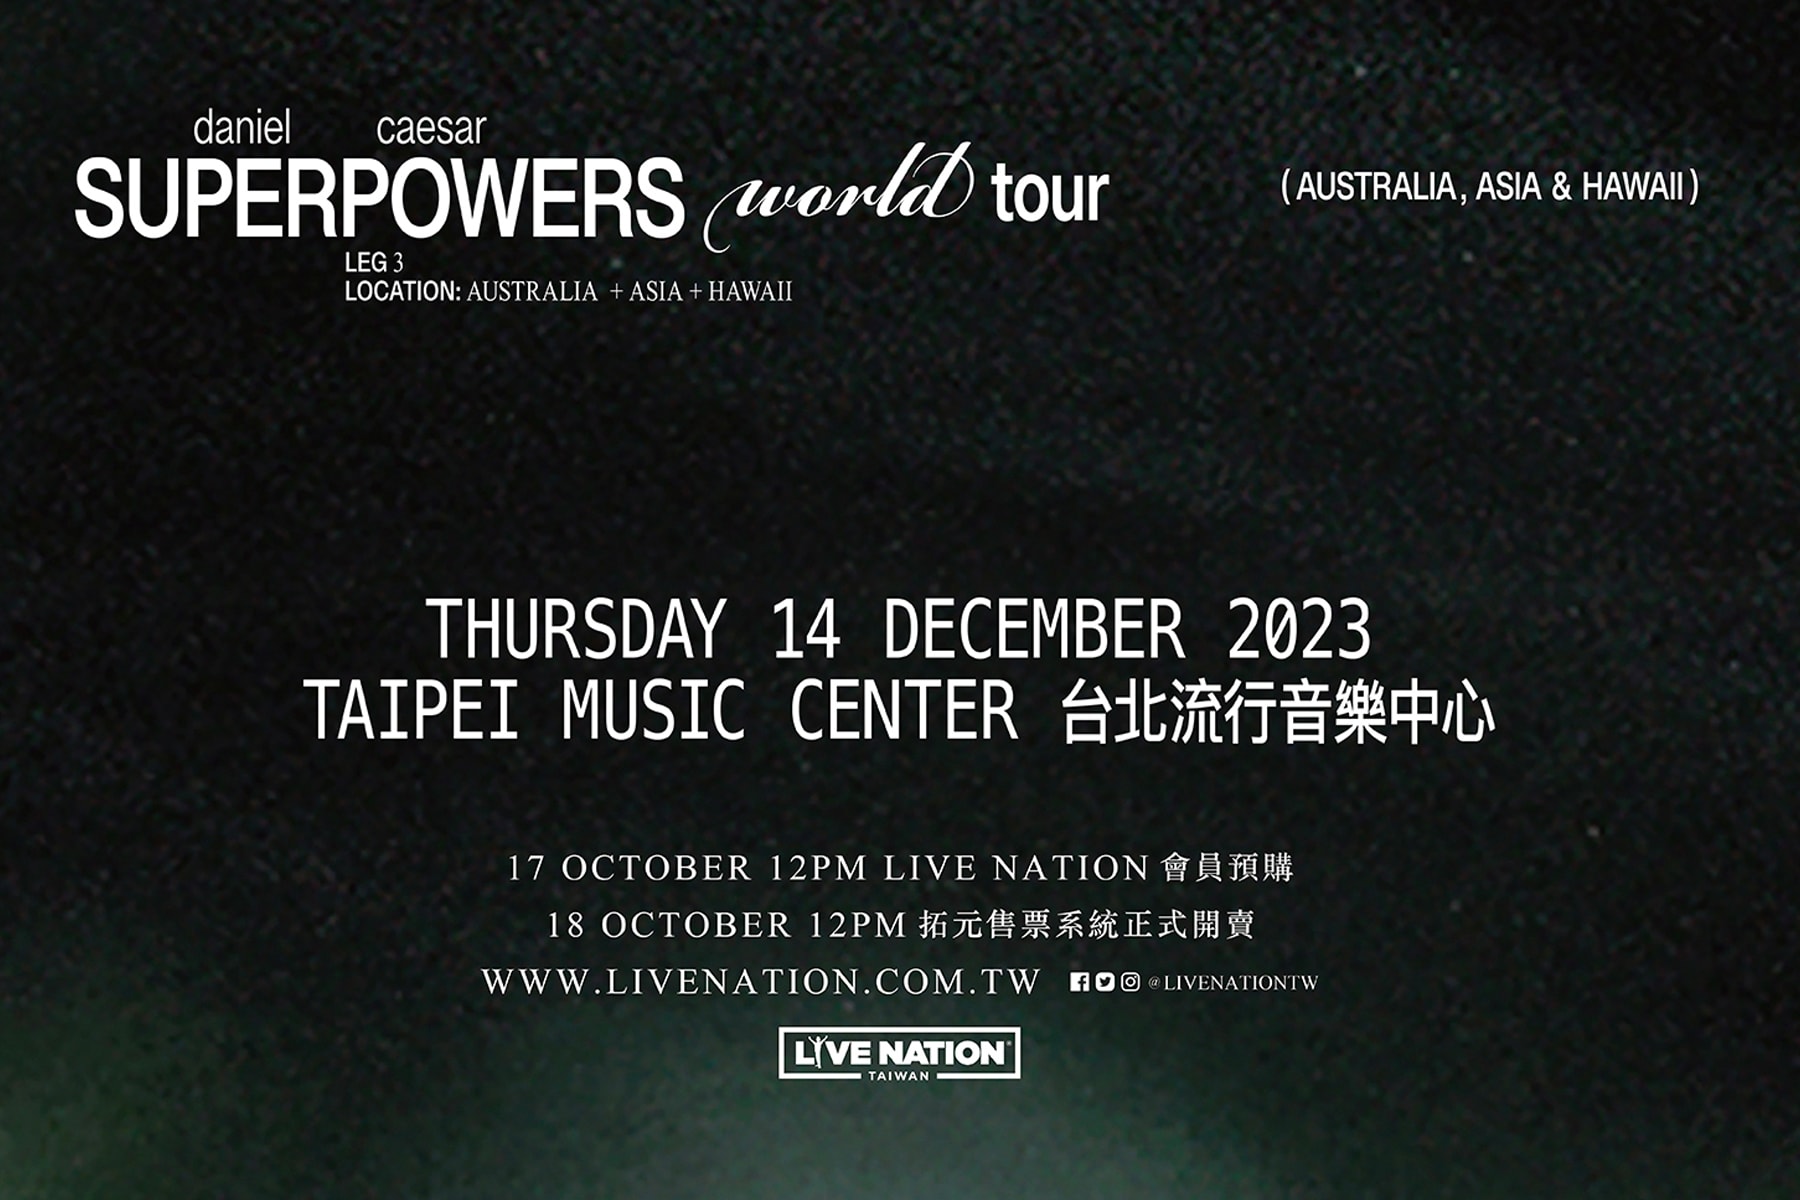 Daniel Caesar 巡迴演唱會《Superpowers World Tour》即將登陸台灣